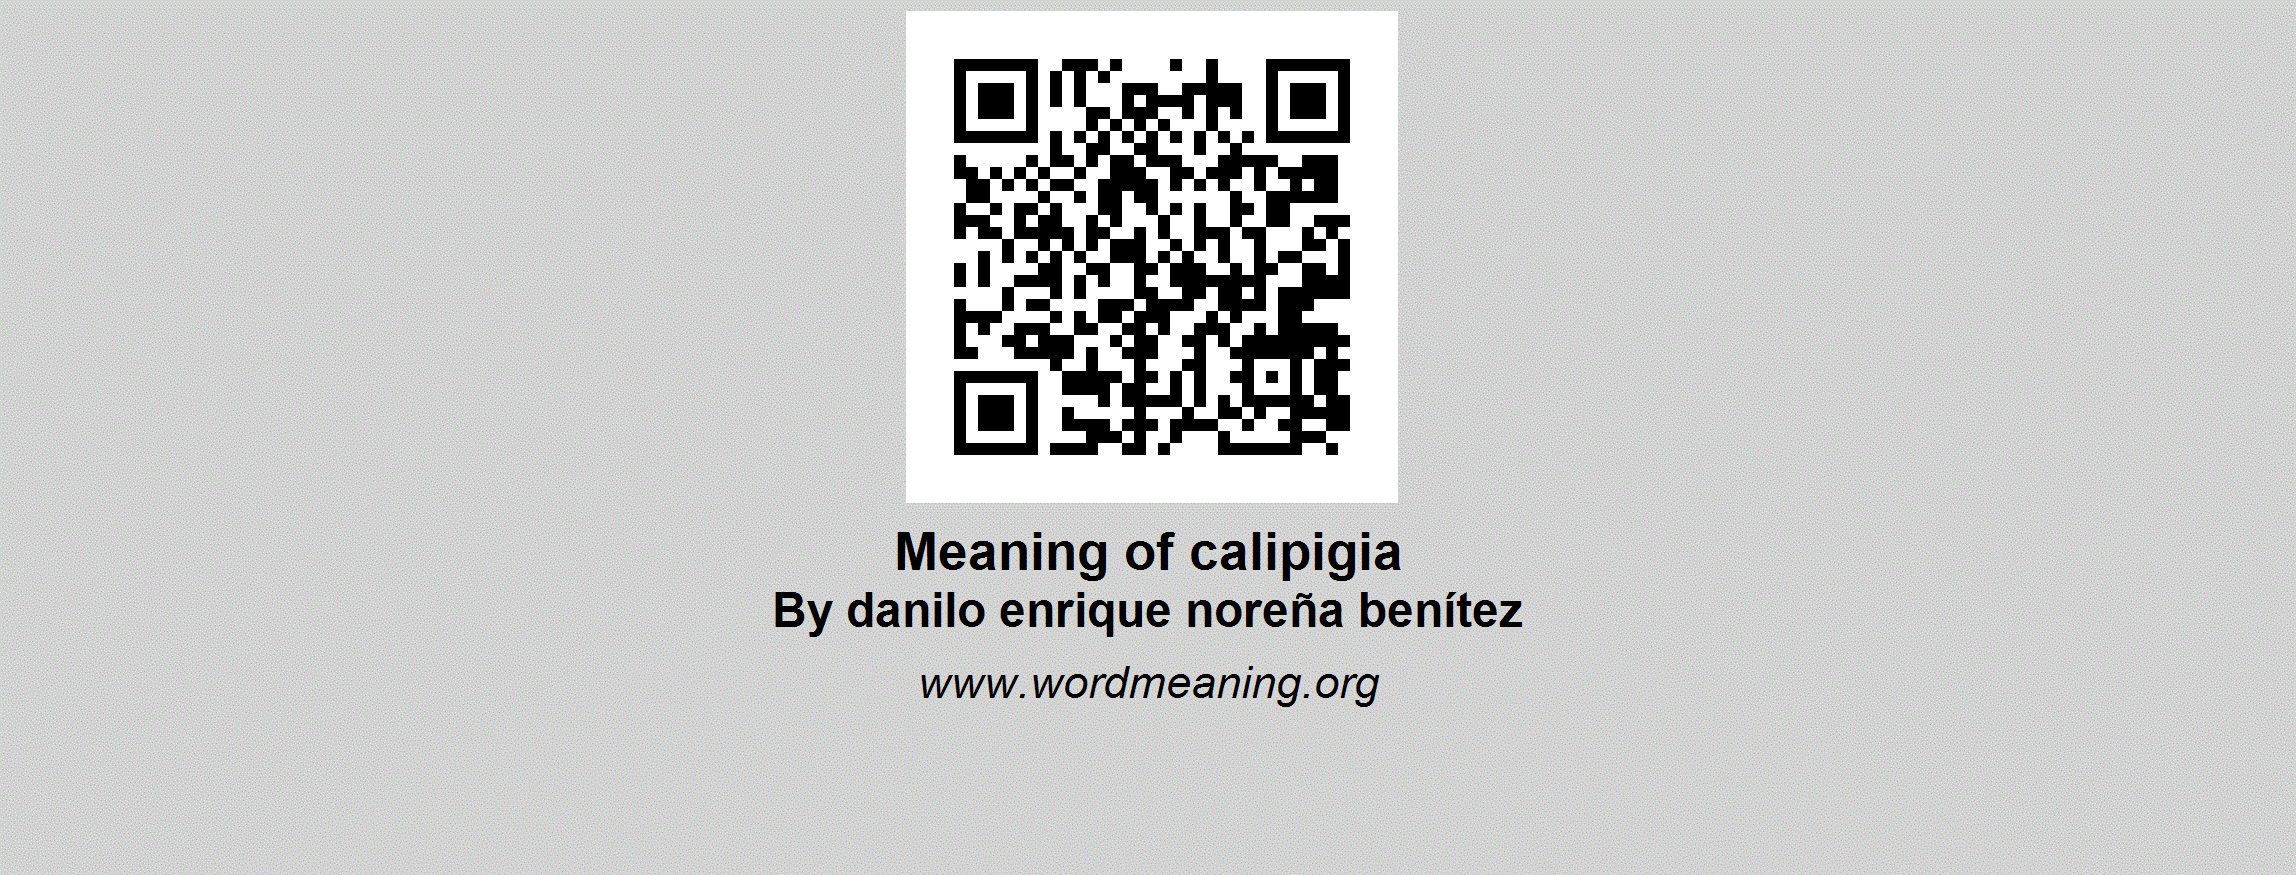 CALIPIGIA  Meaning of calipigia by Danilo Enrique Noreña Benítez